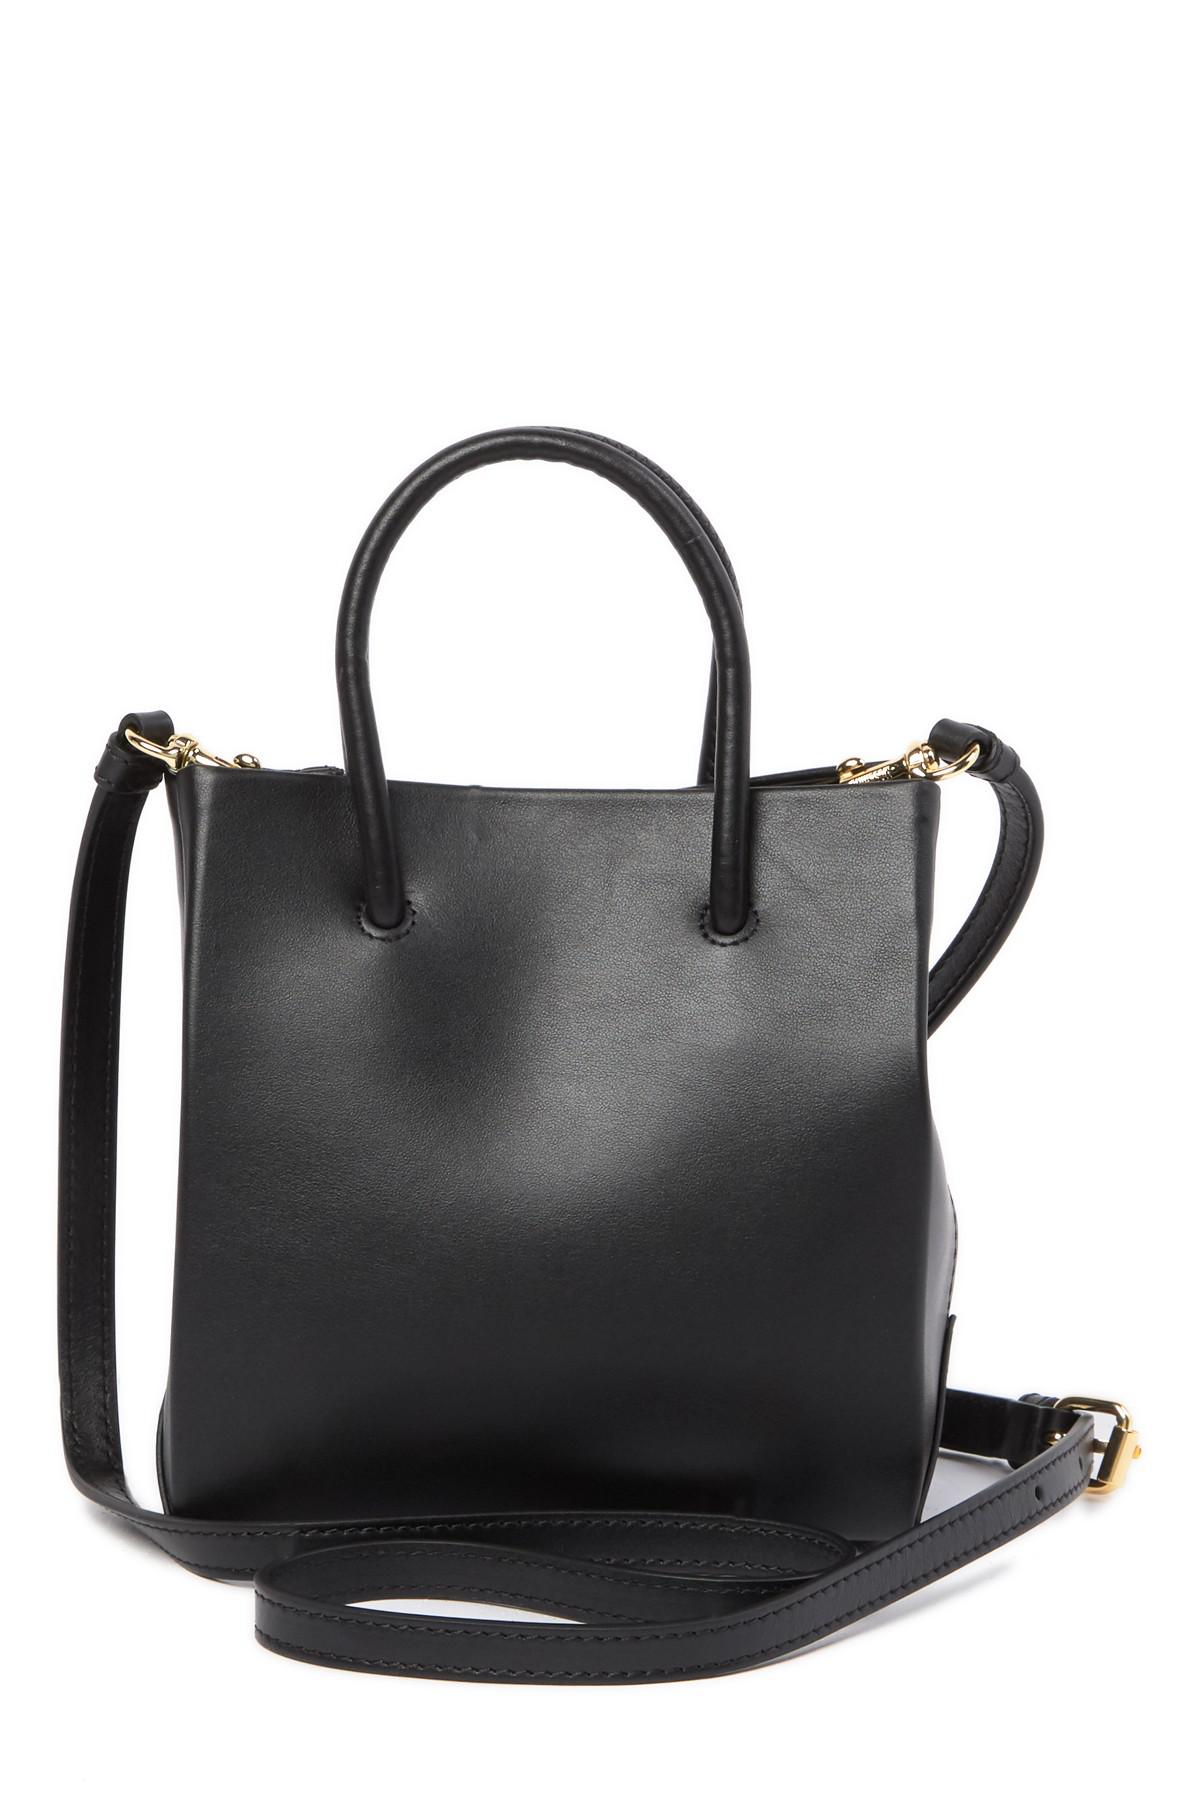 Moschino Leather Brand Logo Mini Tote Bag in Black - Lyst